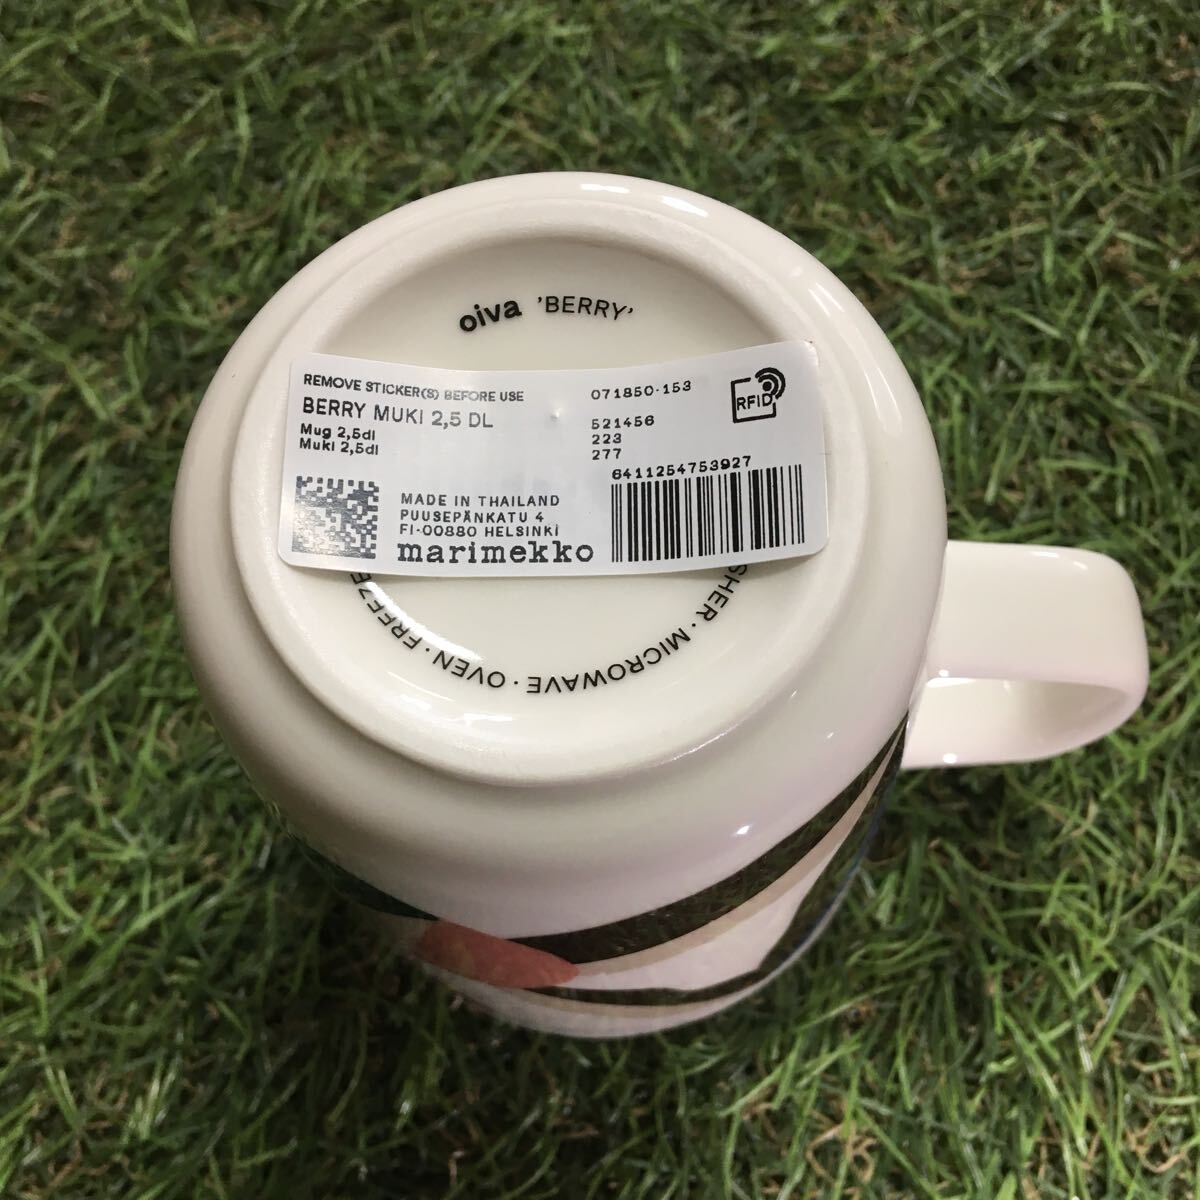 GX1753 marimekko マリメッコ マリメッコベリー 71850-153 マグ 250ml ホワイト 食器 マグカップ 未使用 保管品 マグ